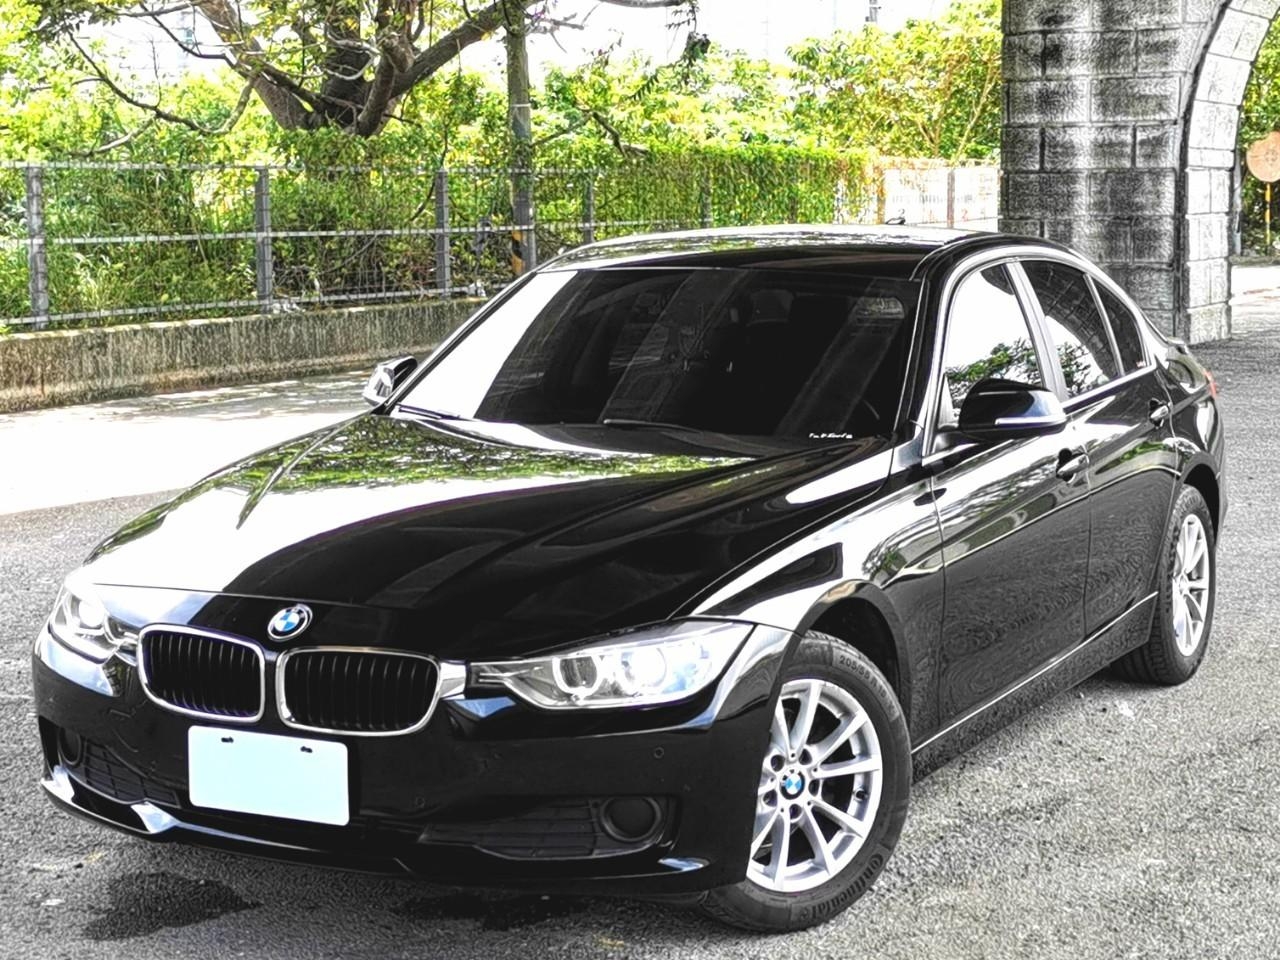 BMW 二手車買賣-2015 BMW 3-Series Sedan 316i-11.5萬公里-SUM認證車庫